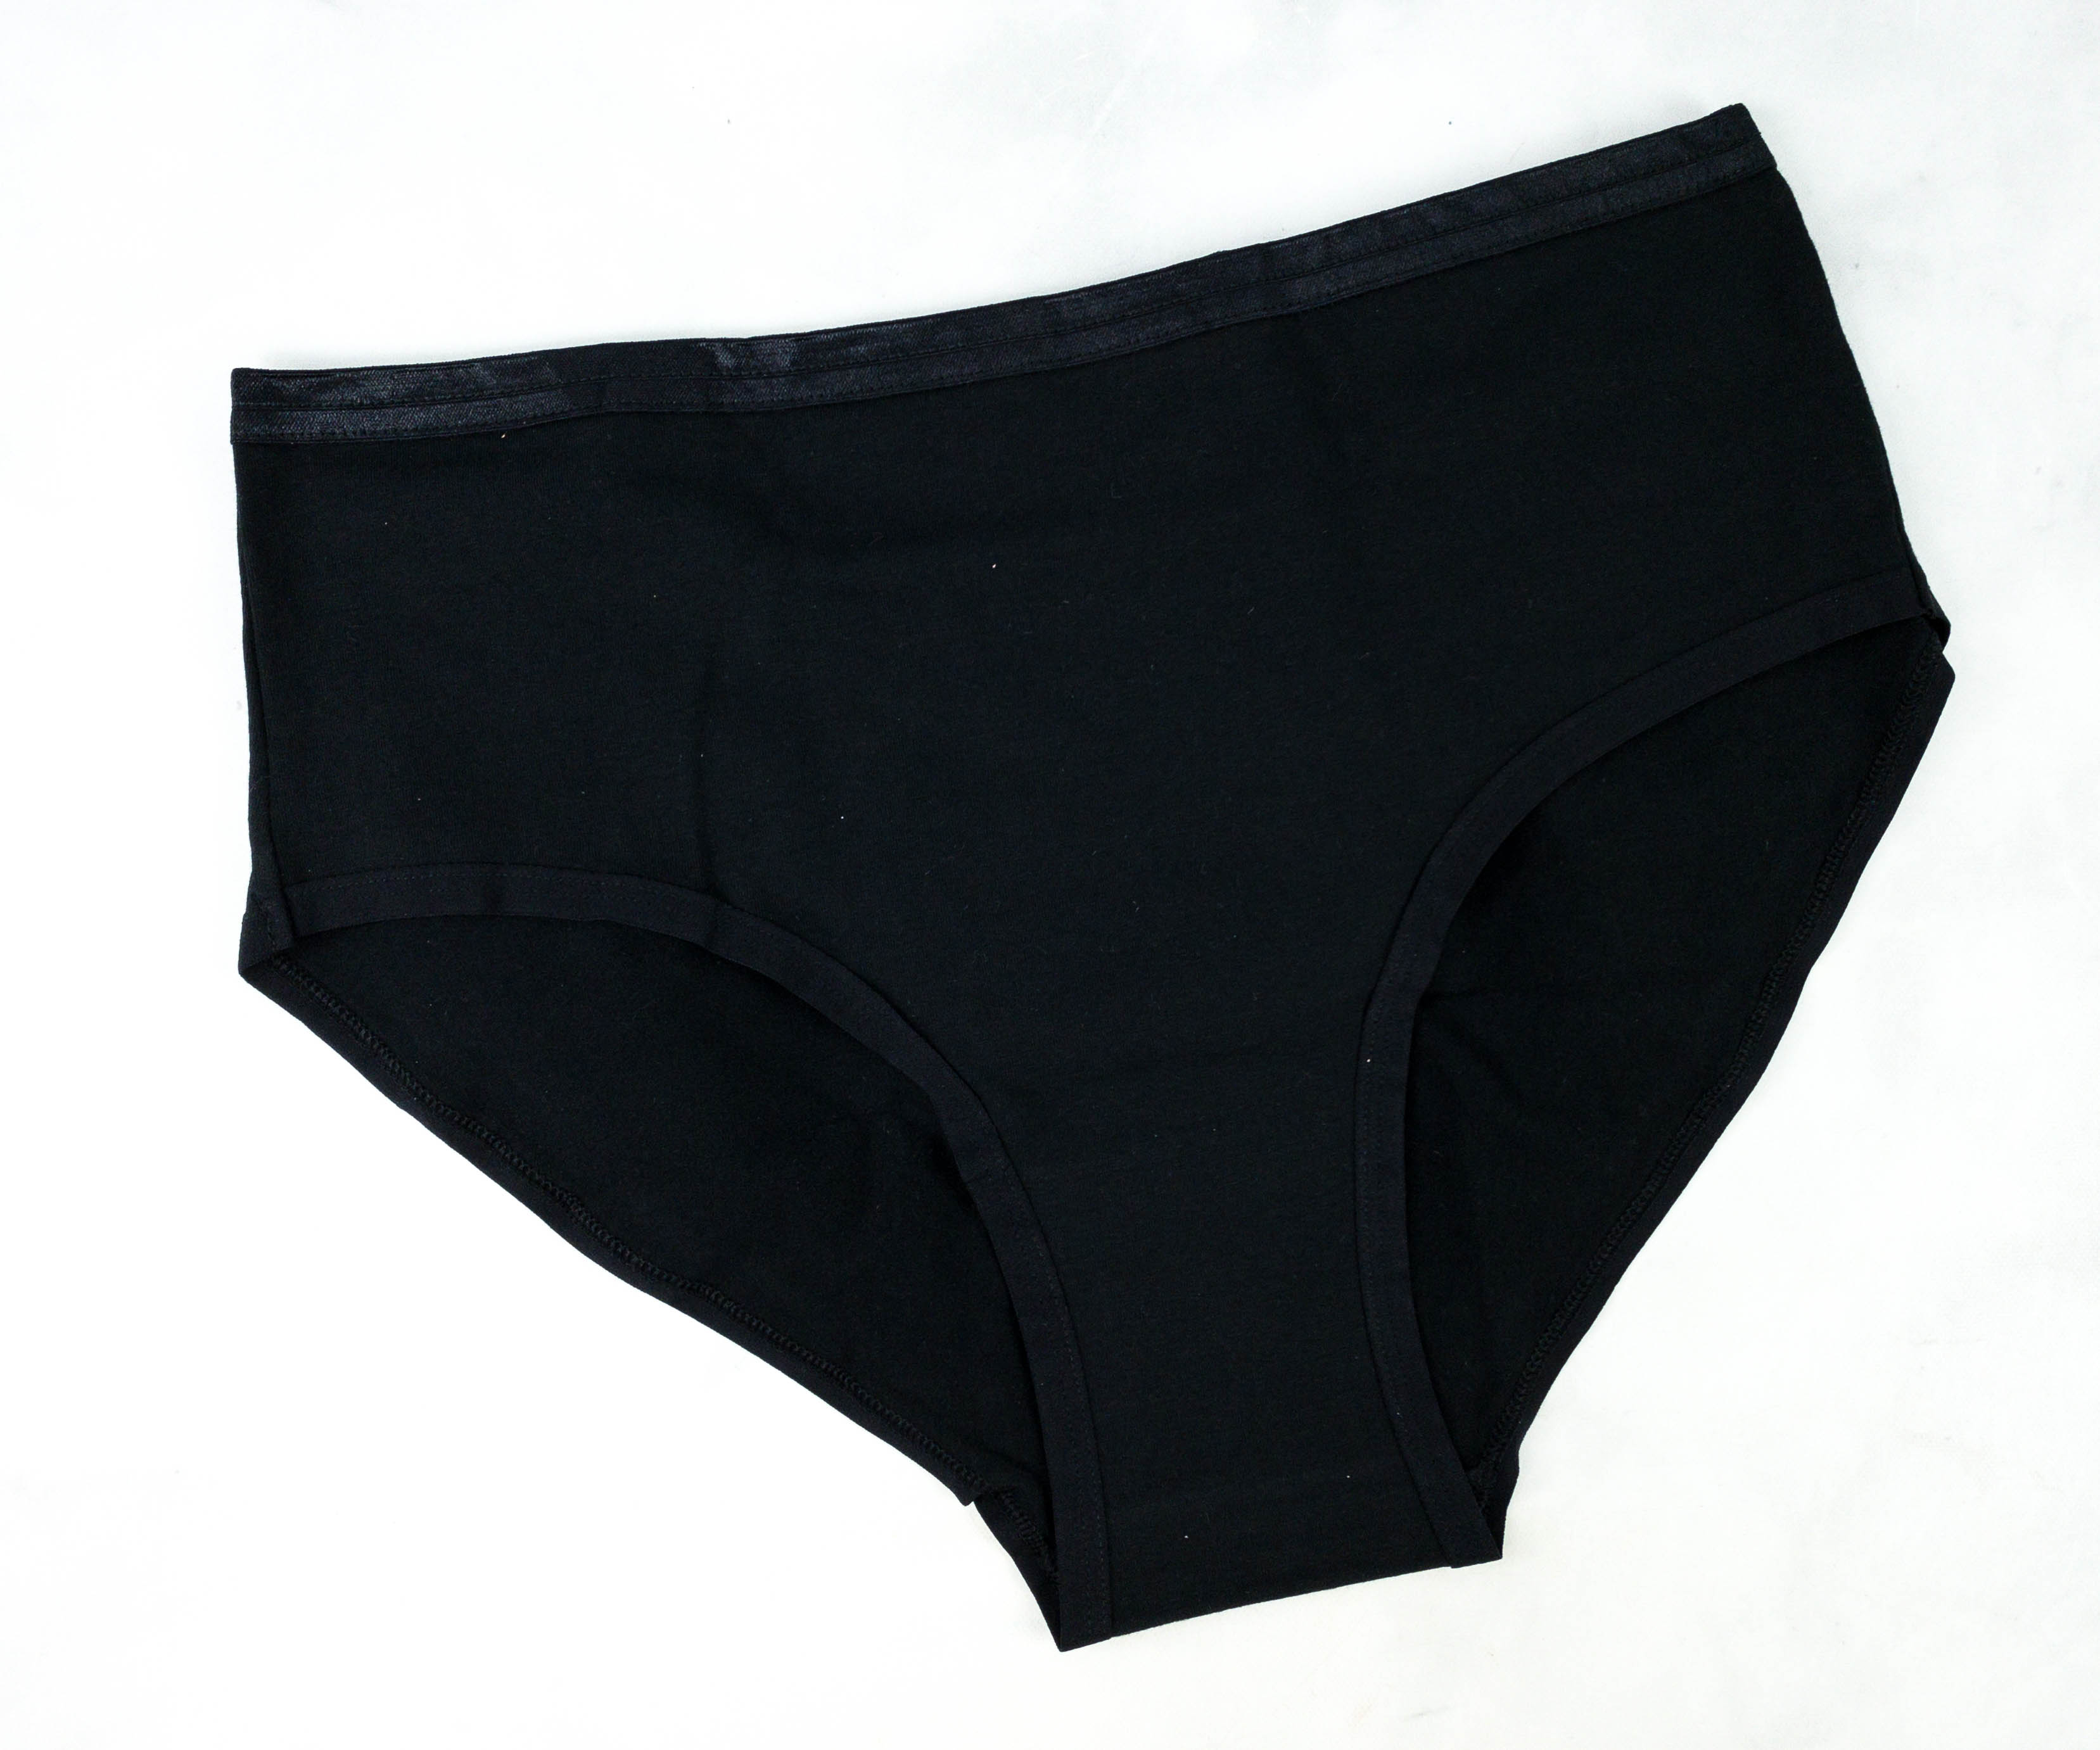 Knickey Review - Organic Underwear Basics - hello subscription